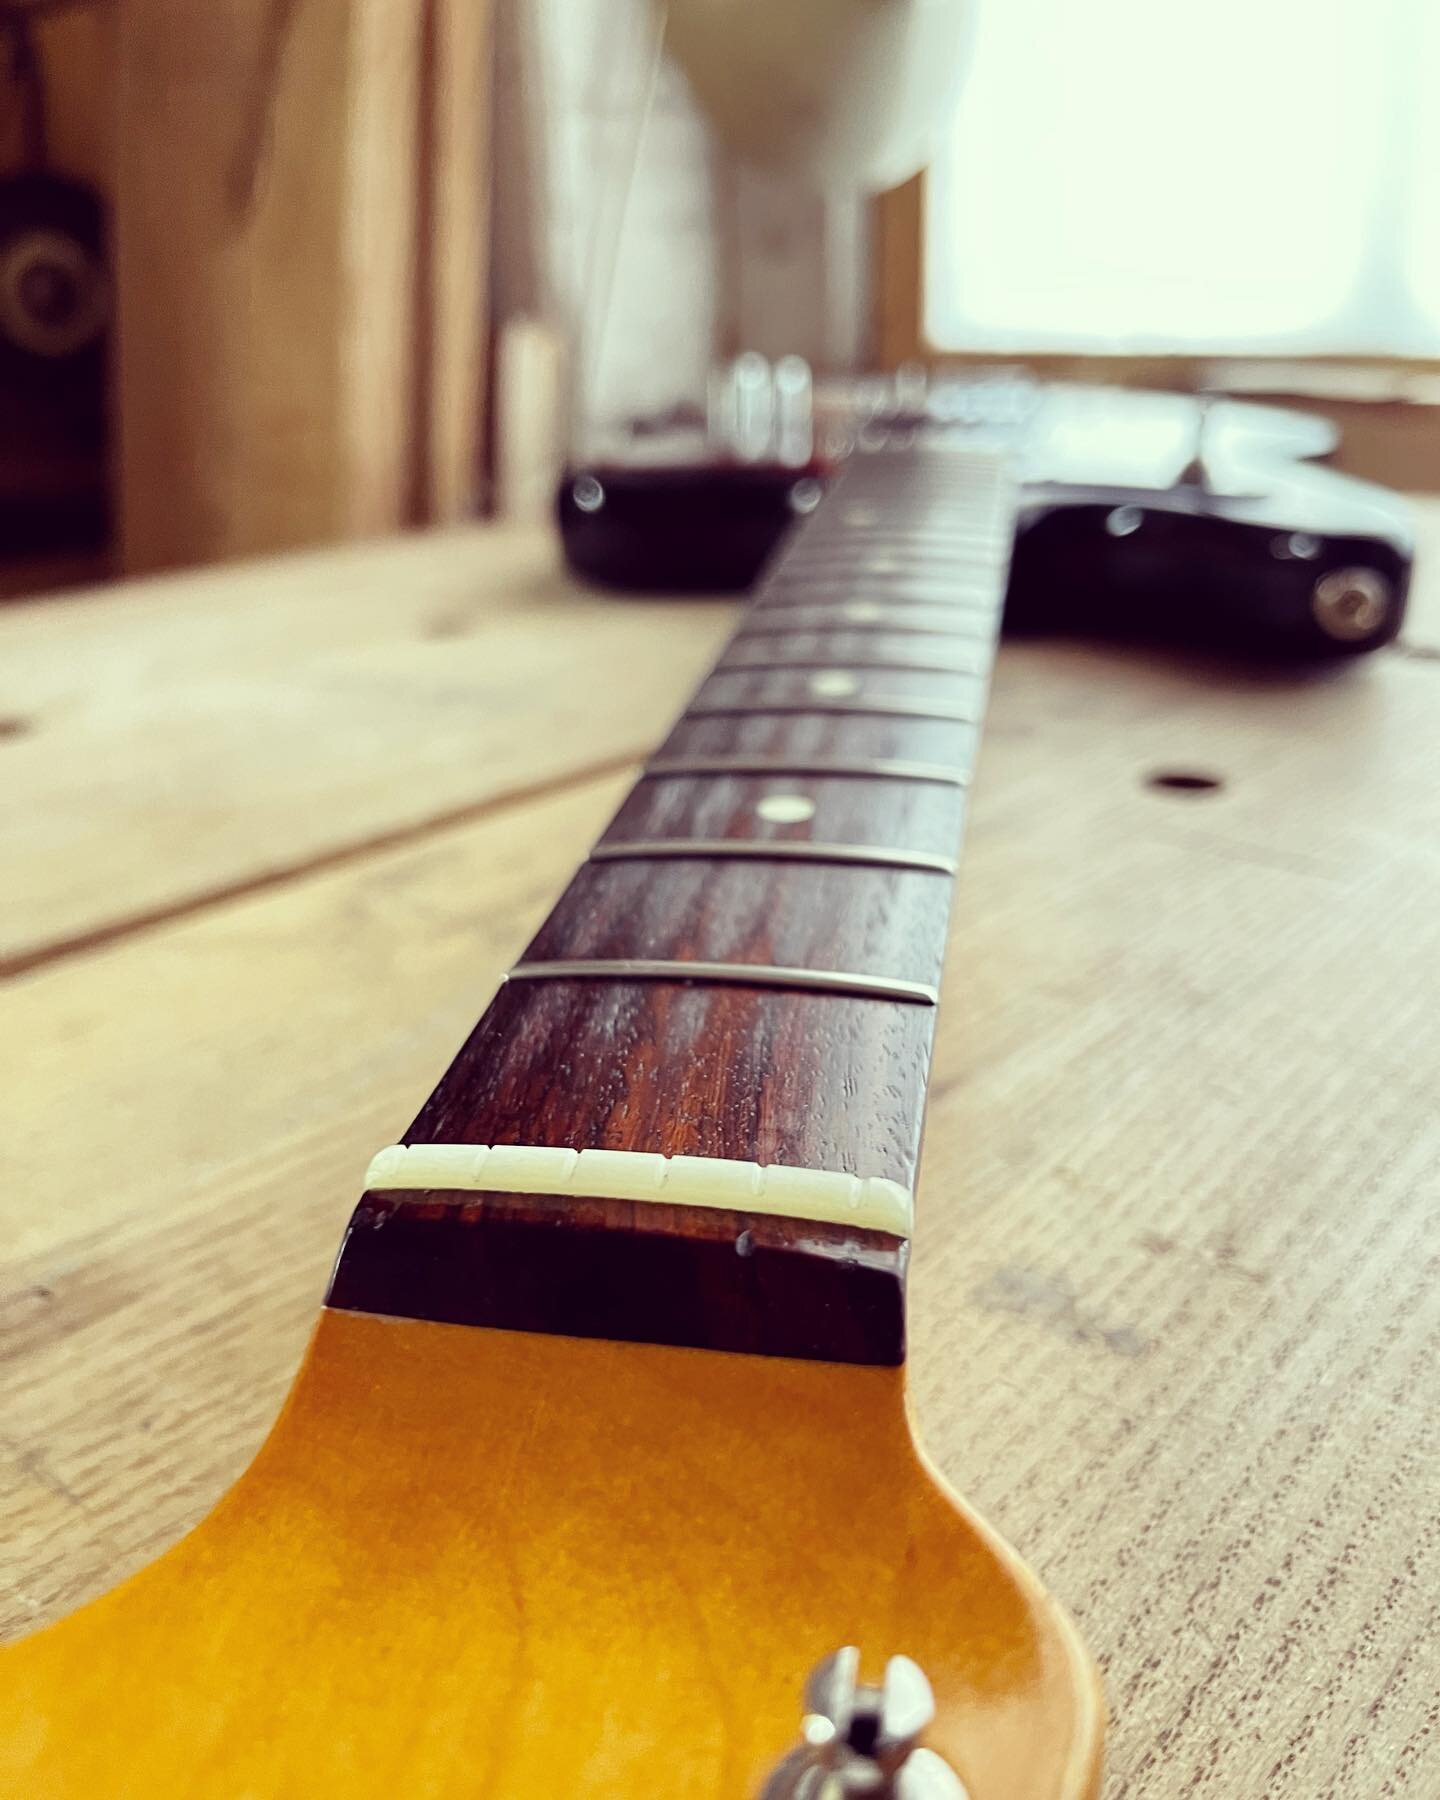 A fret job and new bone nut make this guitar play better than it ever has. Slide 3 is before. #guitarrepair #fretjob #bonenut #luthier #setup